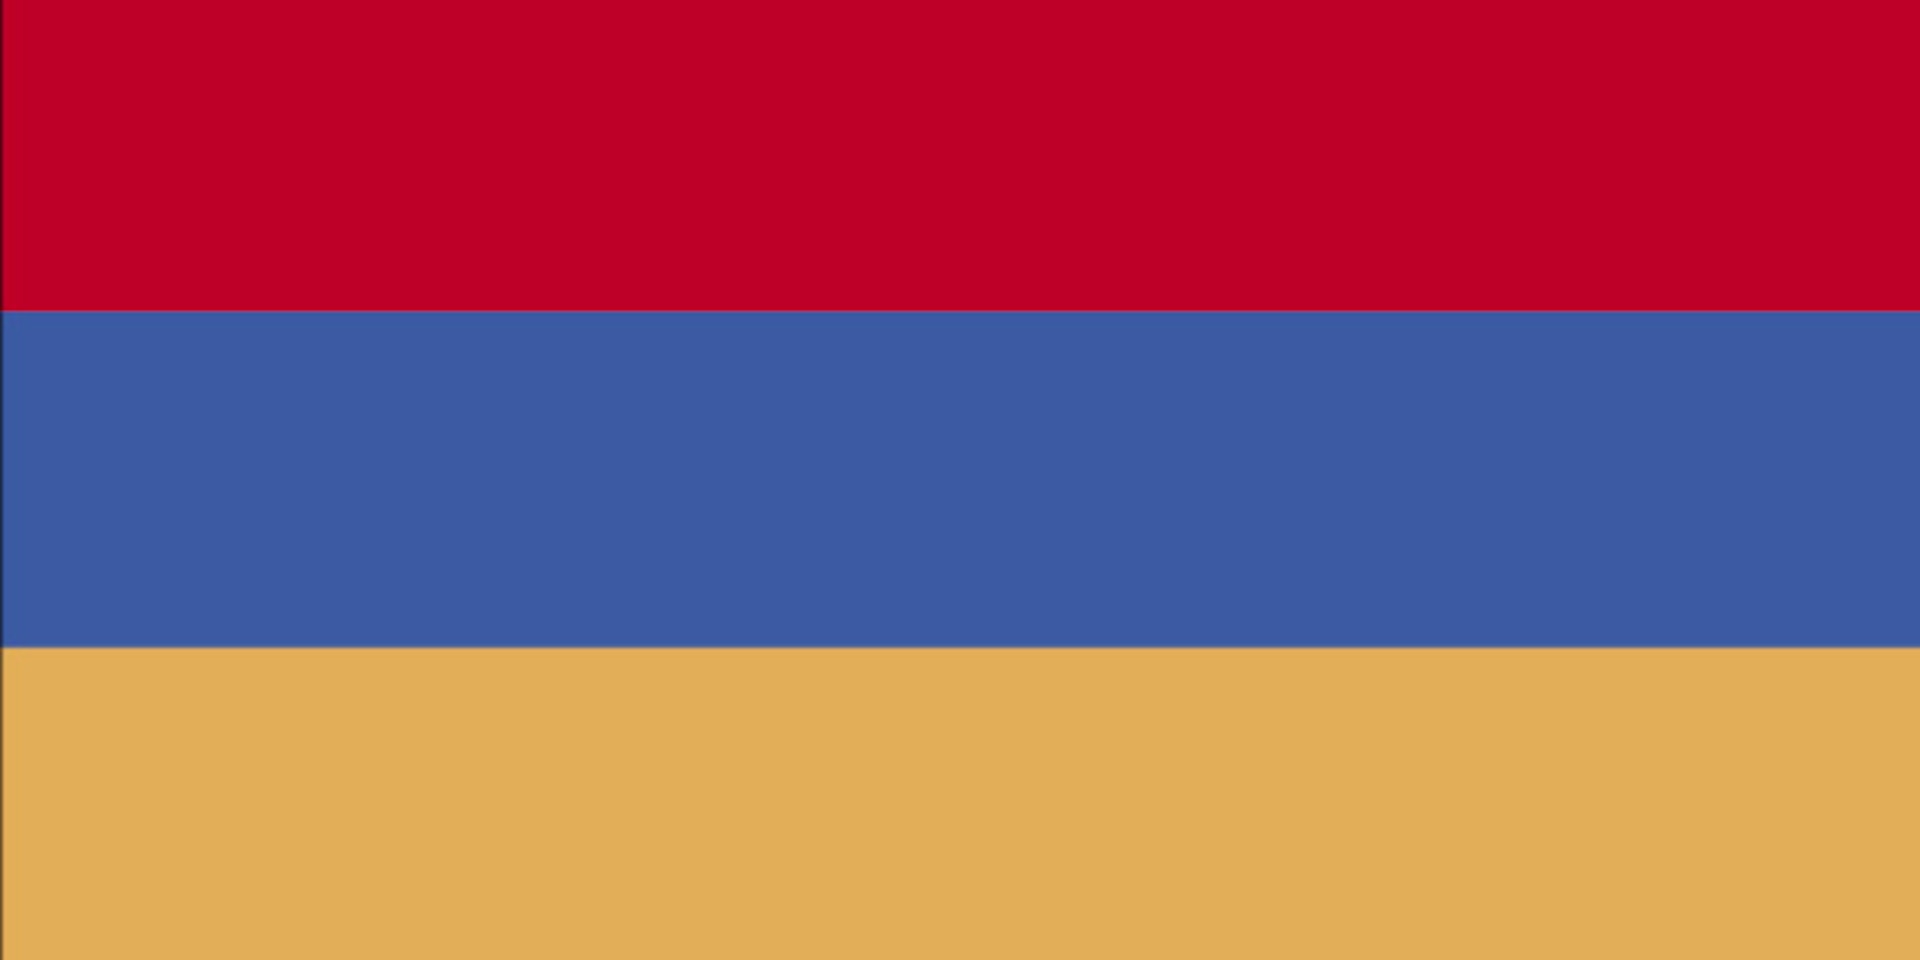 Flag of the Republic of Armenia.